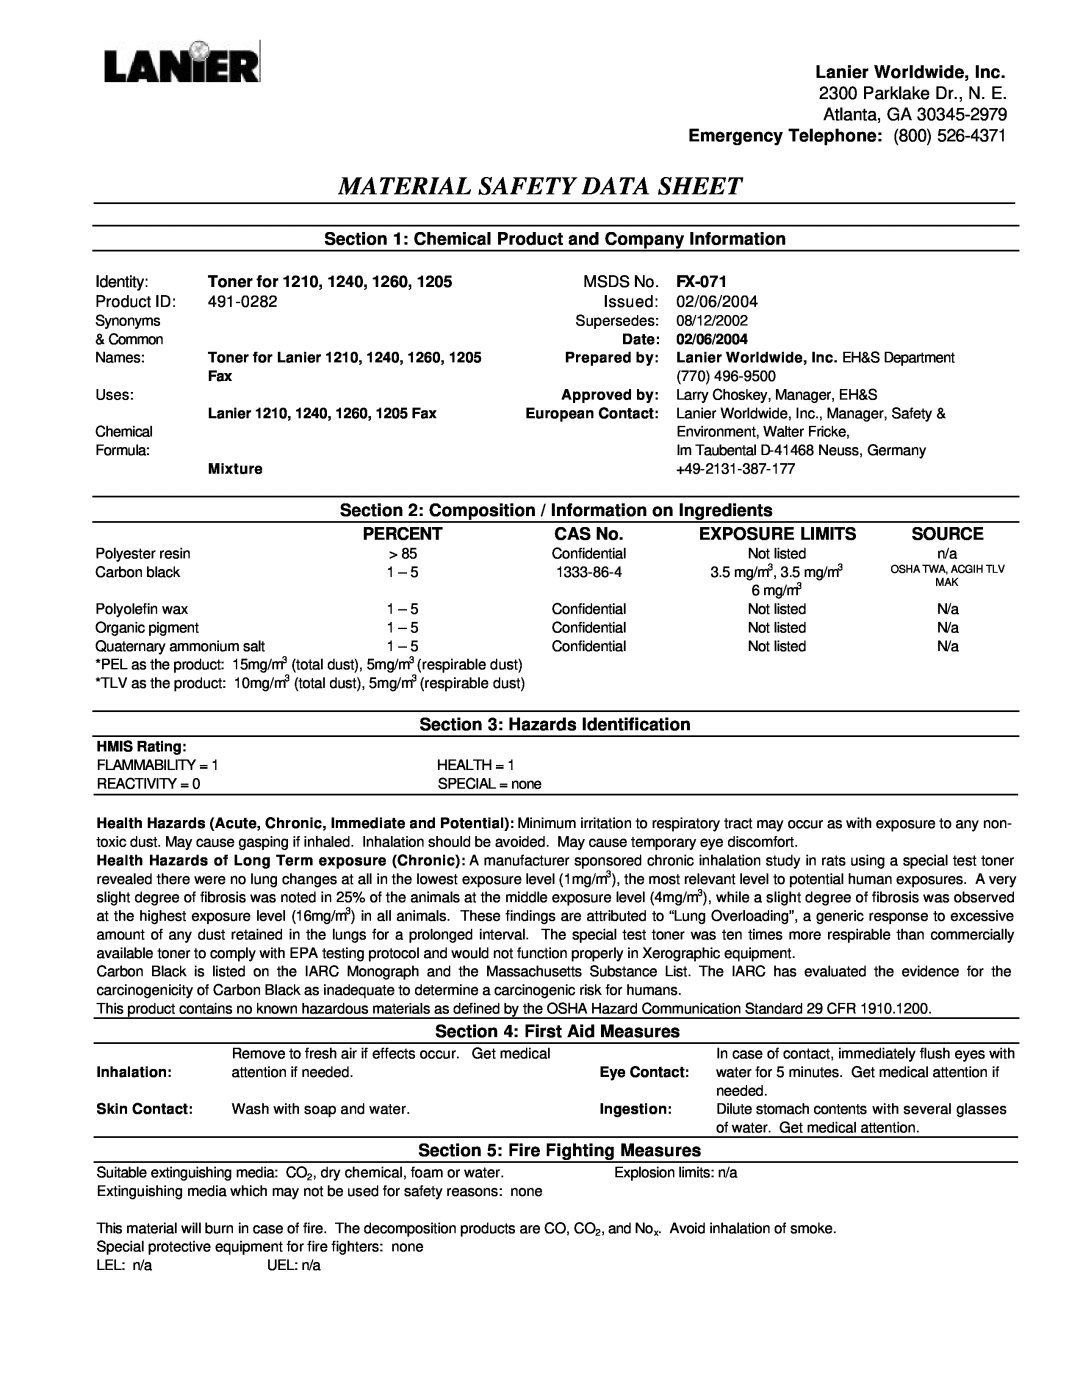 Lanier FX-071 manual Material Safety Data Sheet 